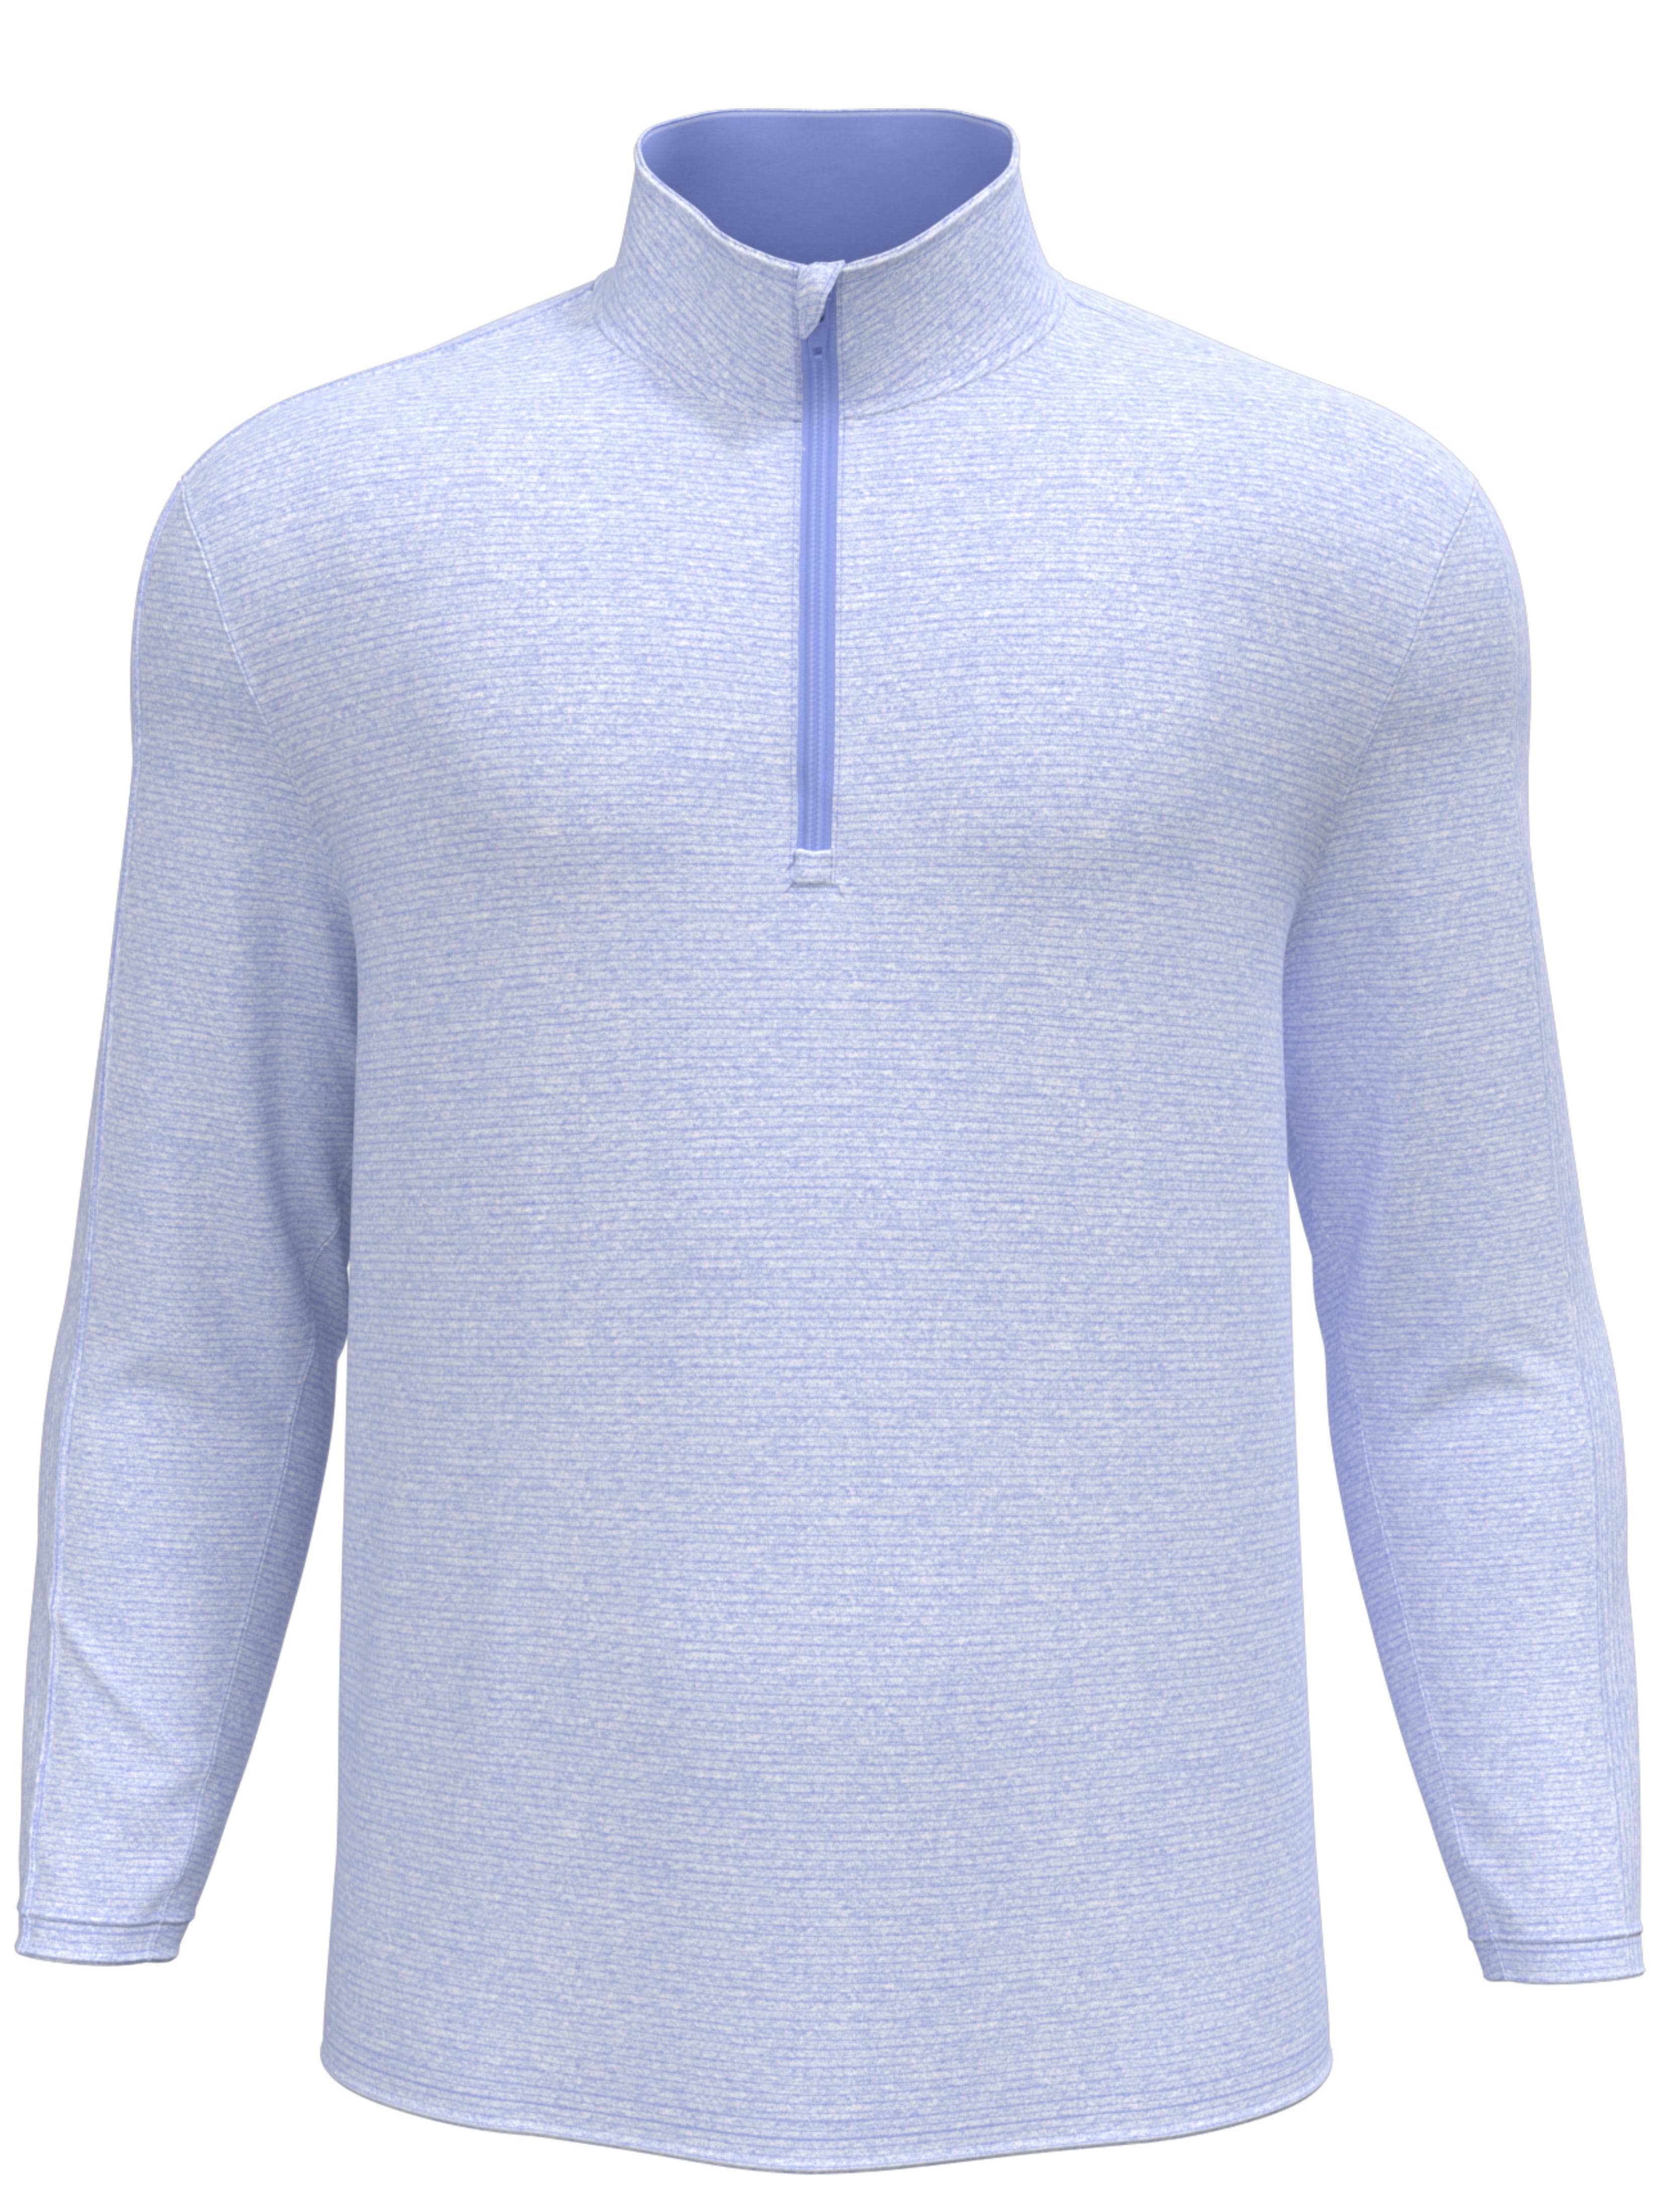 Jack Nicklaus Mens 1/4 Zip Sun Shade Base Layer Golf Shirt, Size XL, Light Coastline Bl Heather Blue, Polyester/Elastane | Golf Apparel Shop